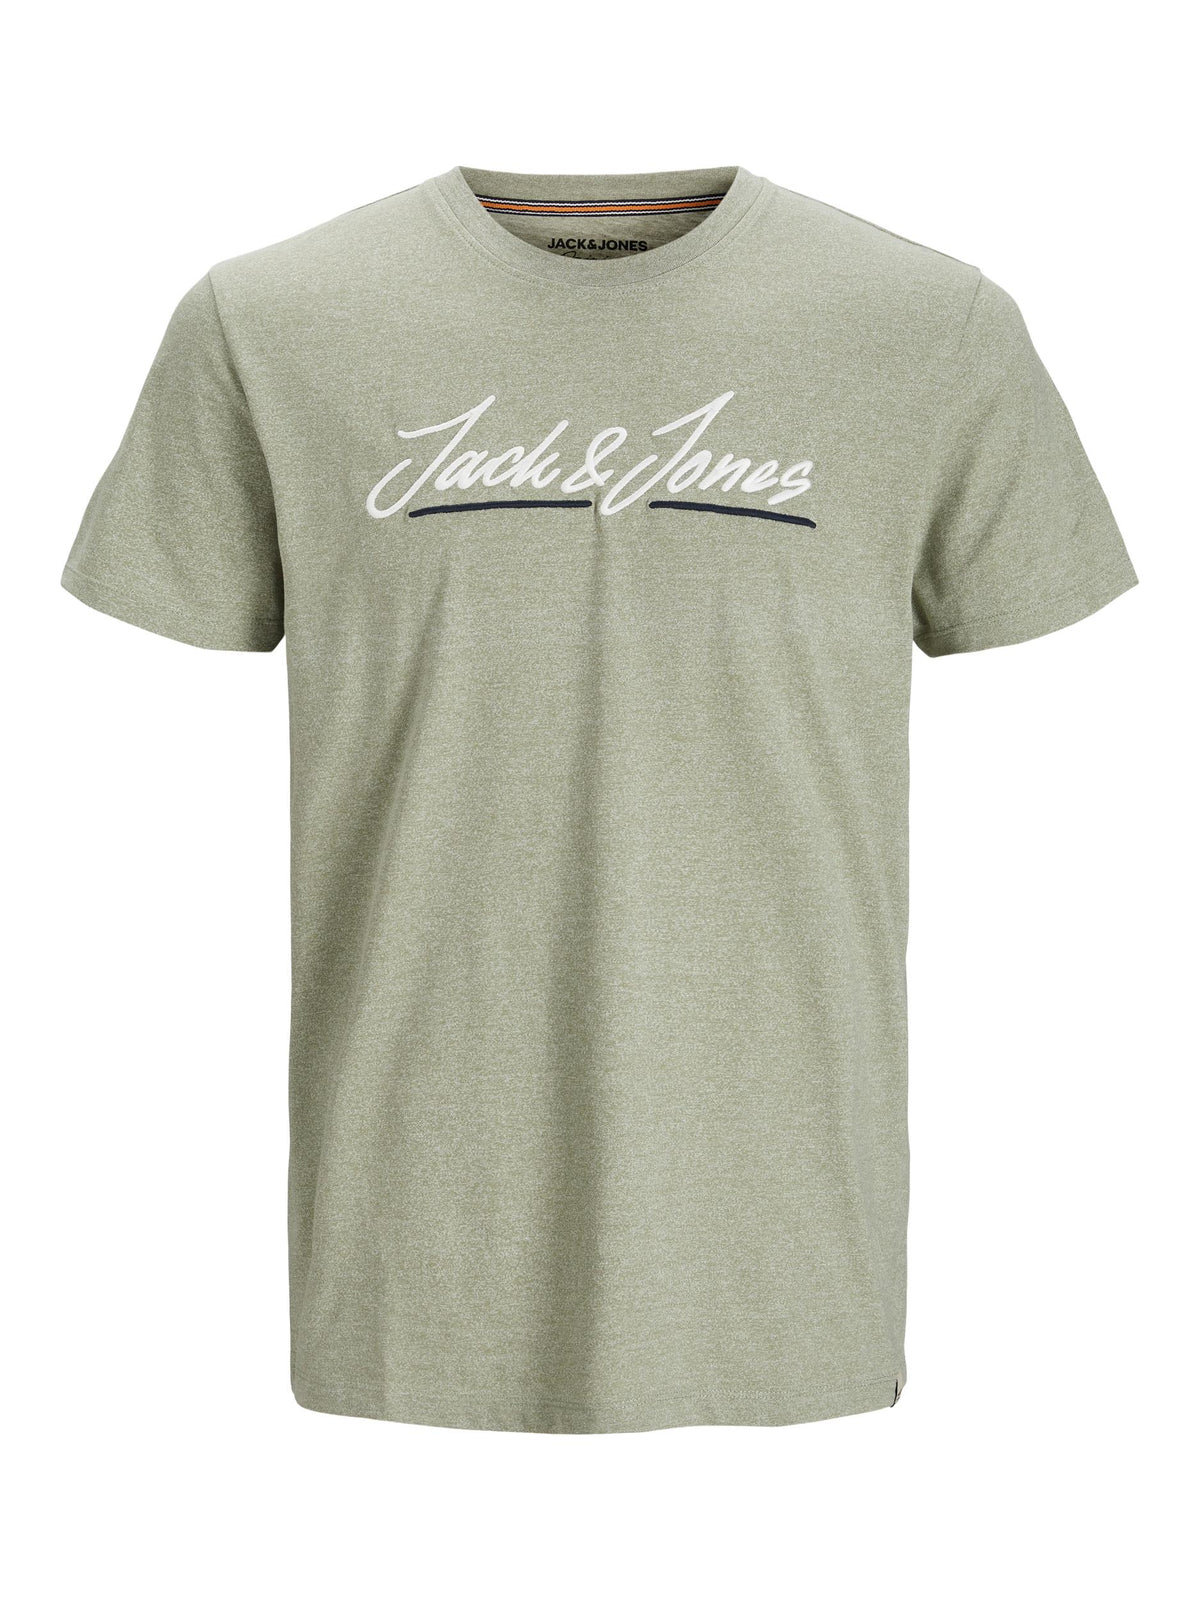 JORTONS Upscale Branded T-Shirt